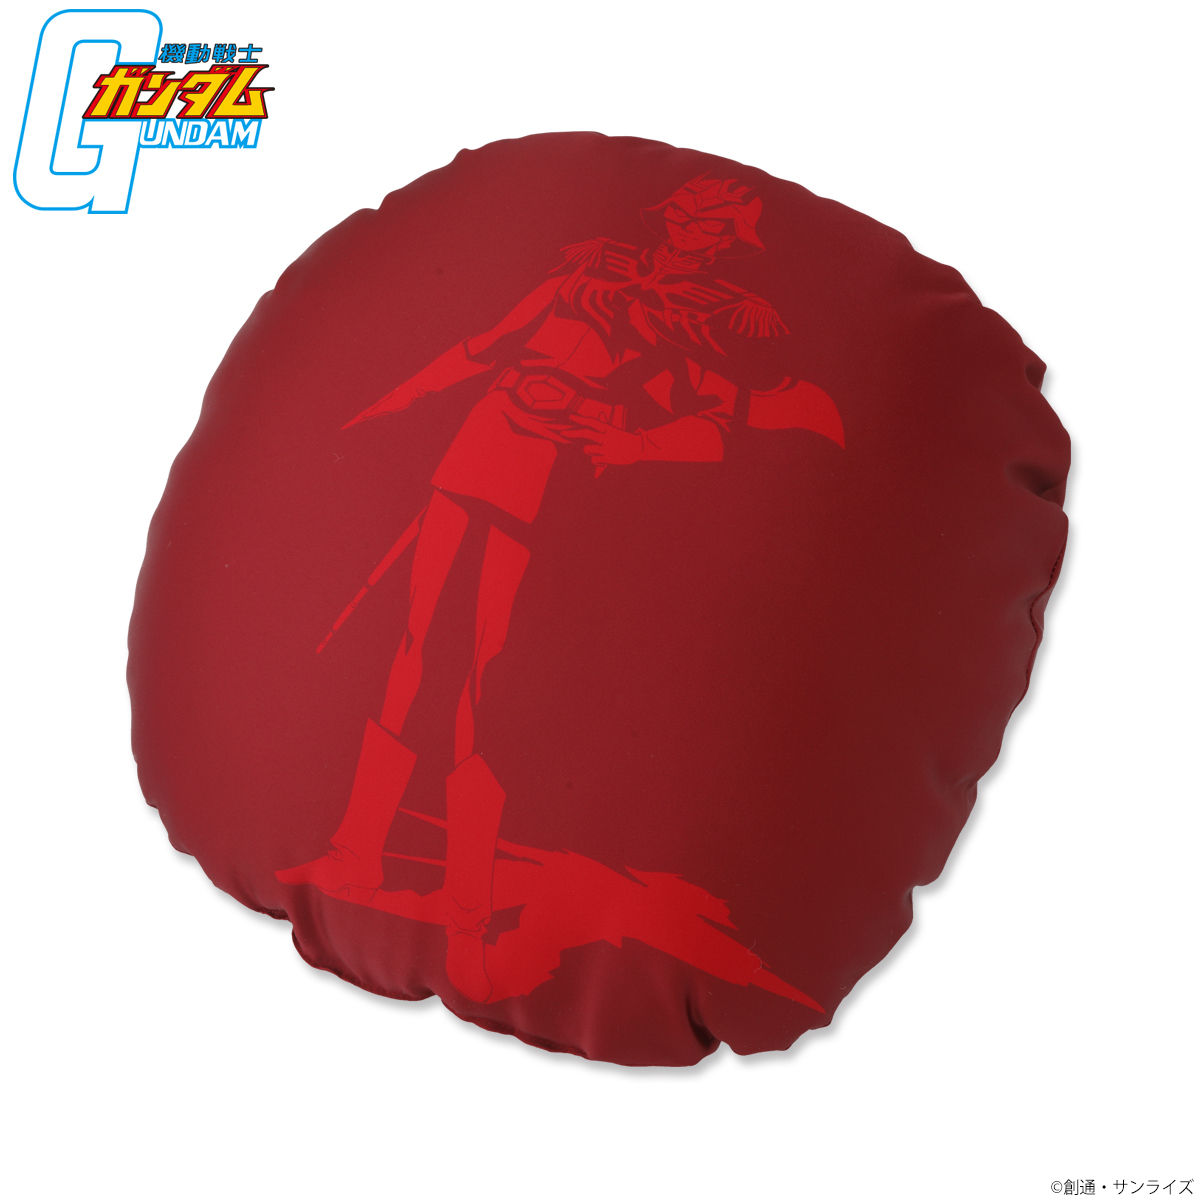 Mobile Suit Gundam RED Series Pillow